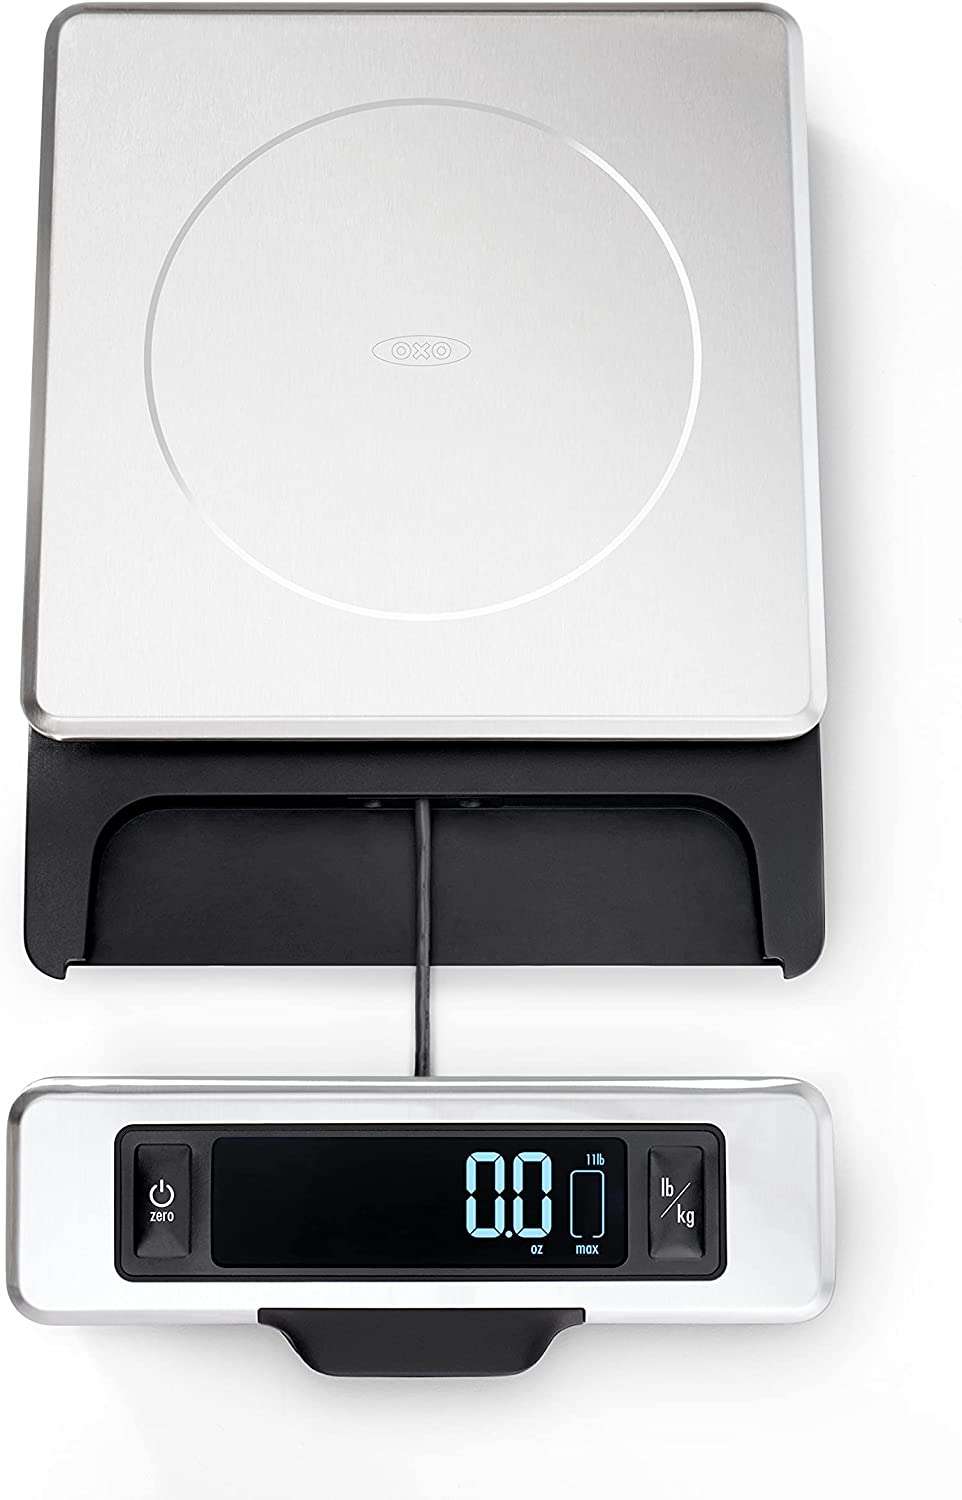 8. OXO Kitchen Scale